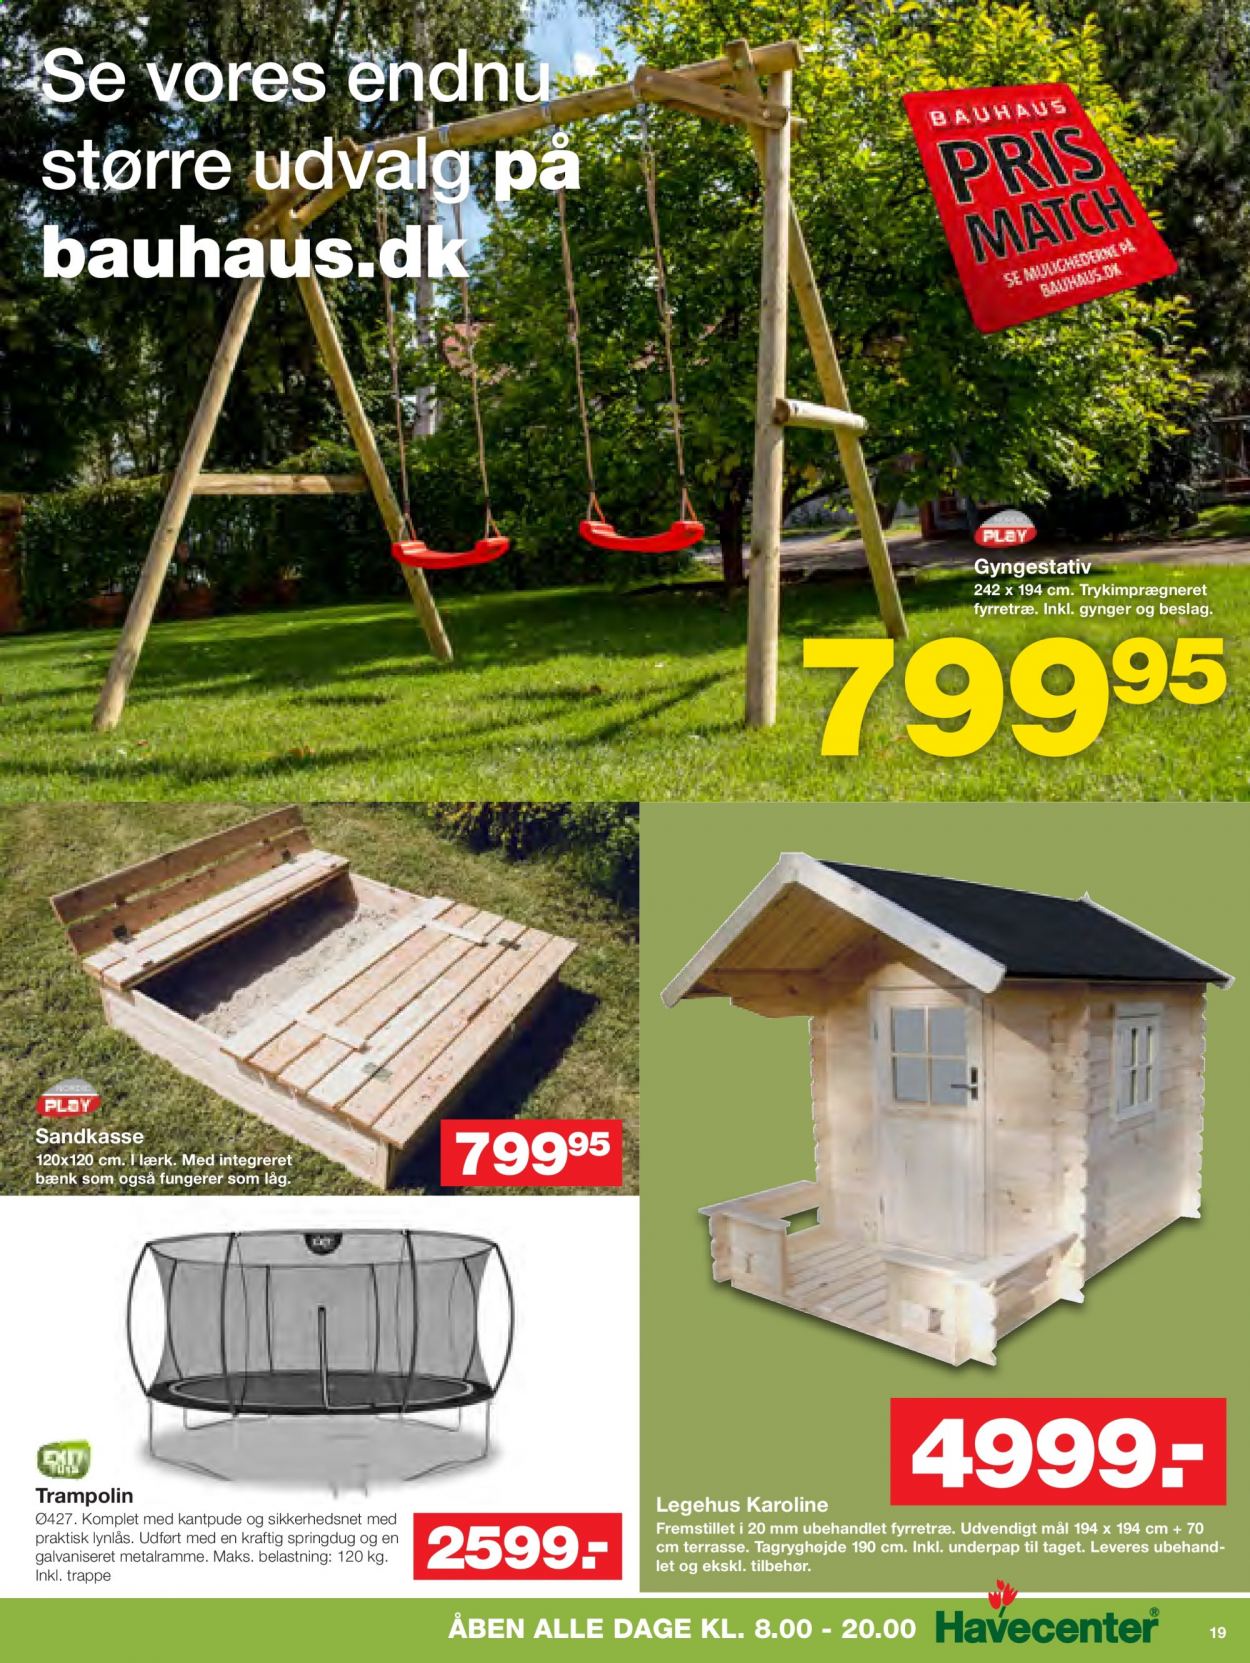 Bauhaus tilbudsavis  - 13.05.2021 - 20.05.2021. Side 19.